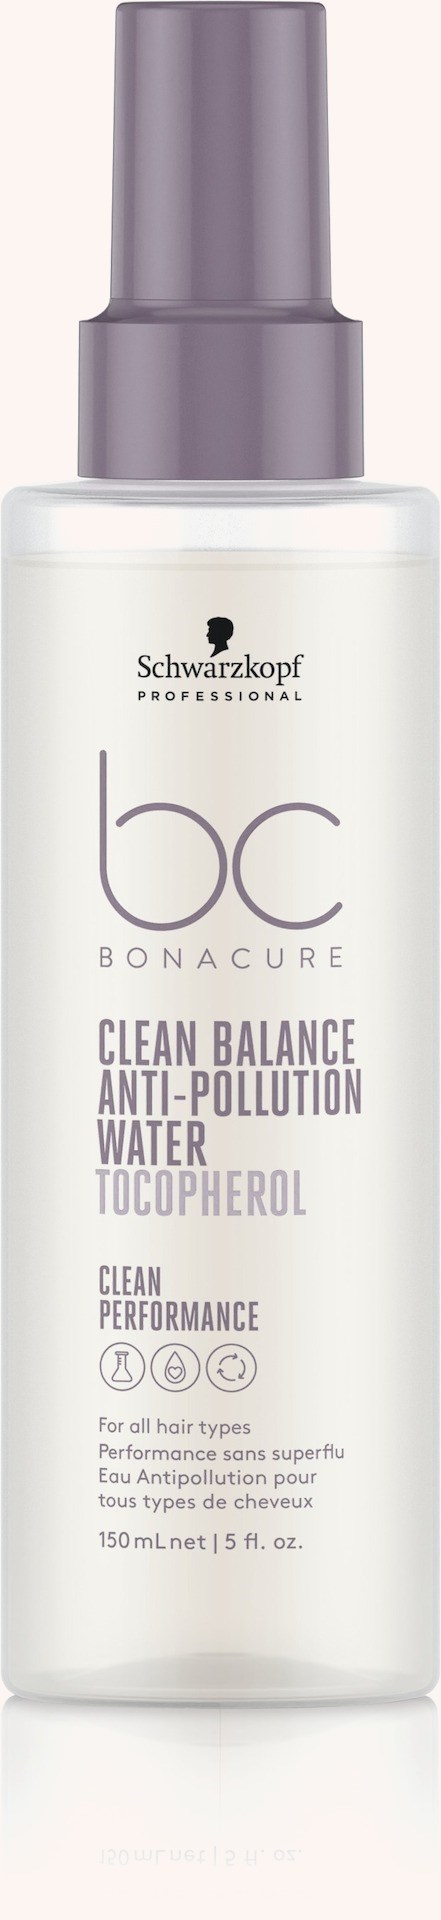 BC Anti-Pollution Water Tokoferol 150 ml